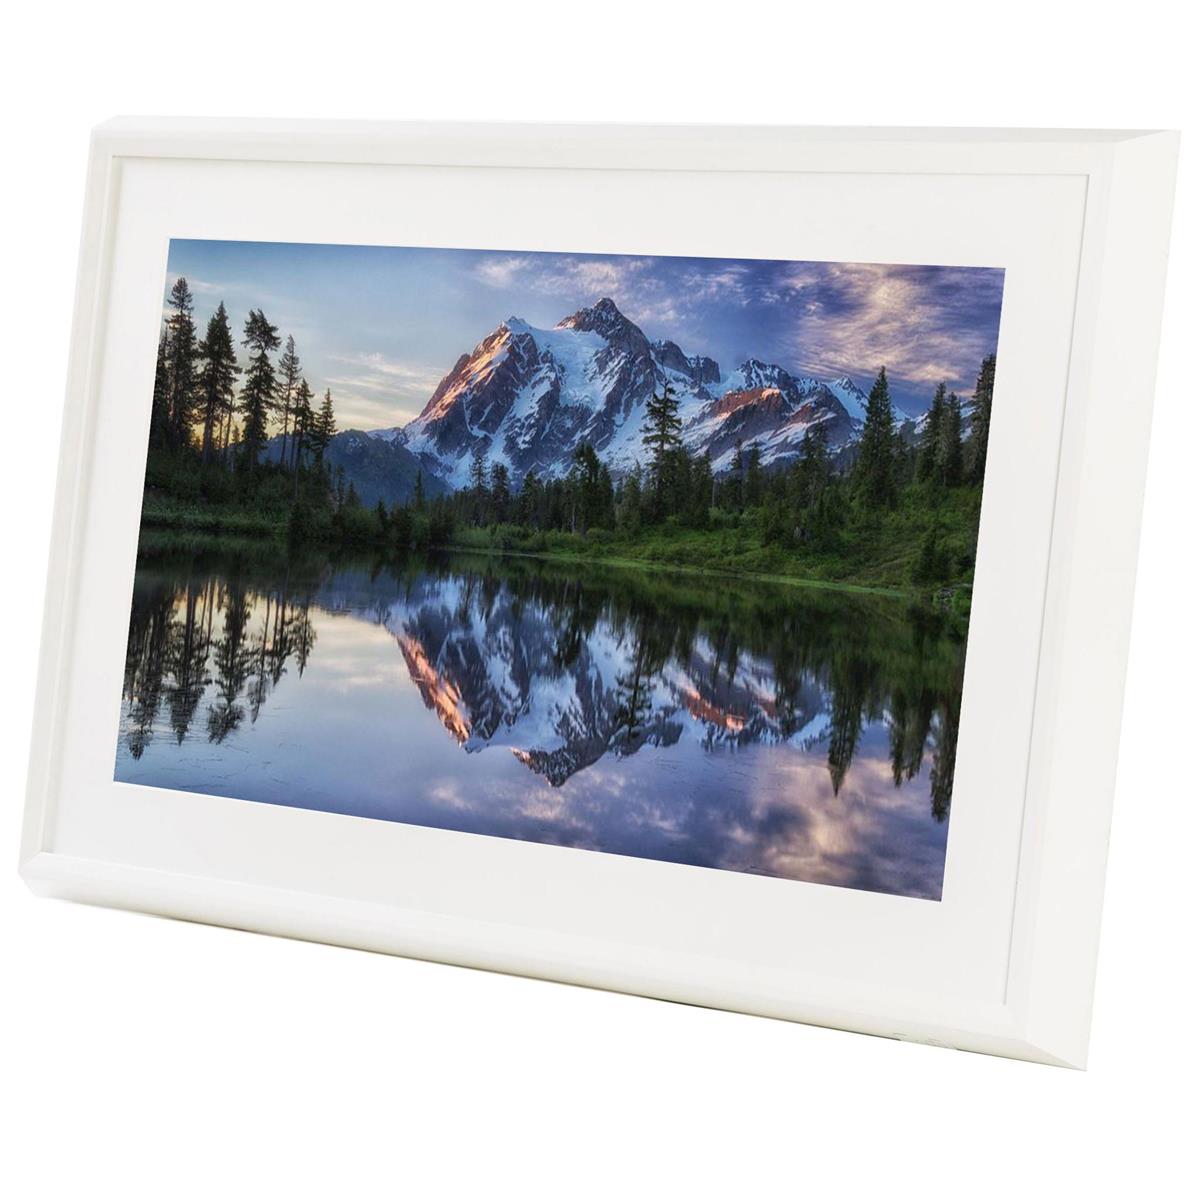 

Matrox Meural - Canvas Leonora 27" Widescreen LCD WiFi Digital Photo Frame - White